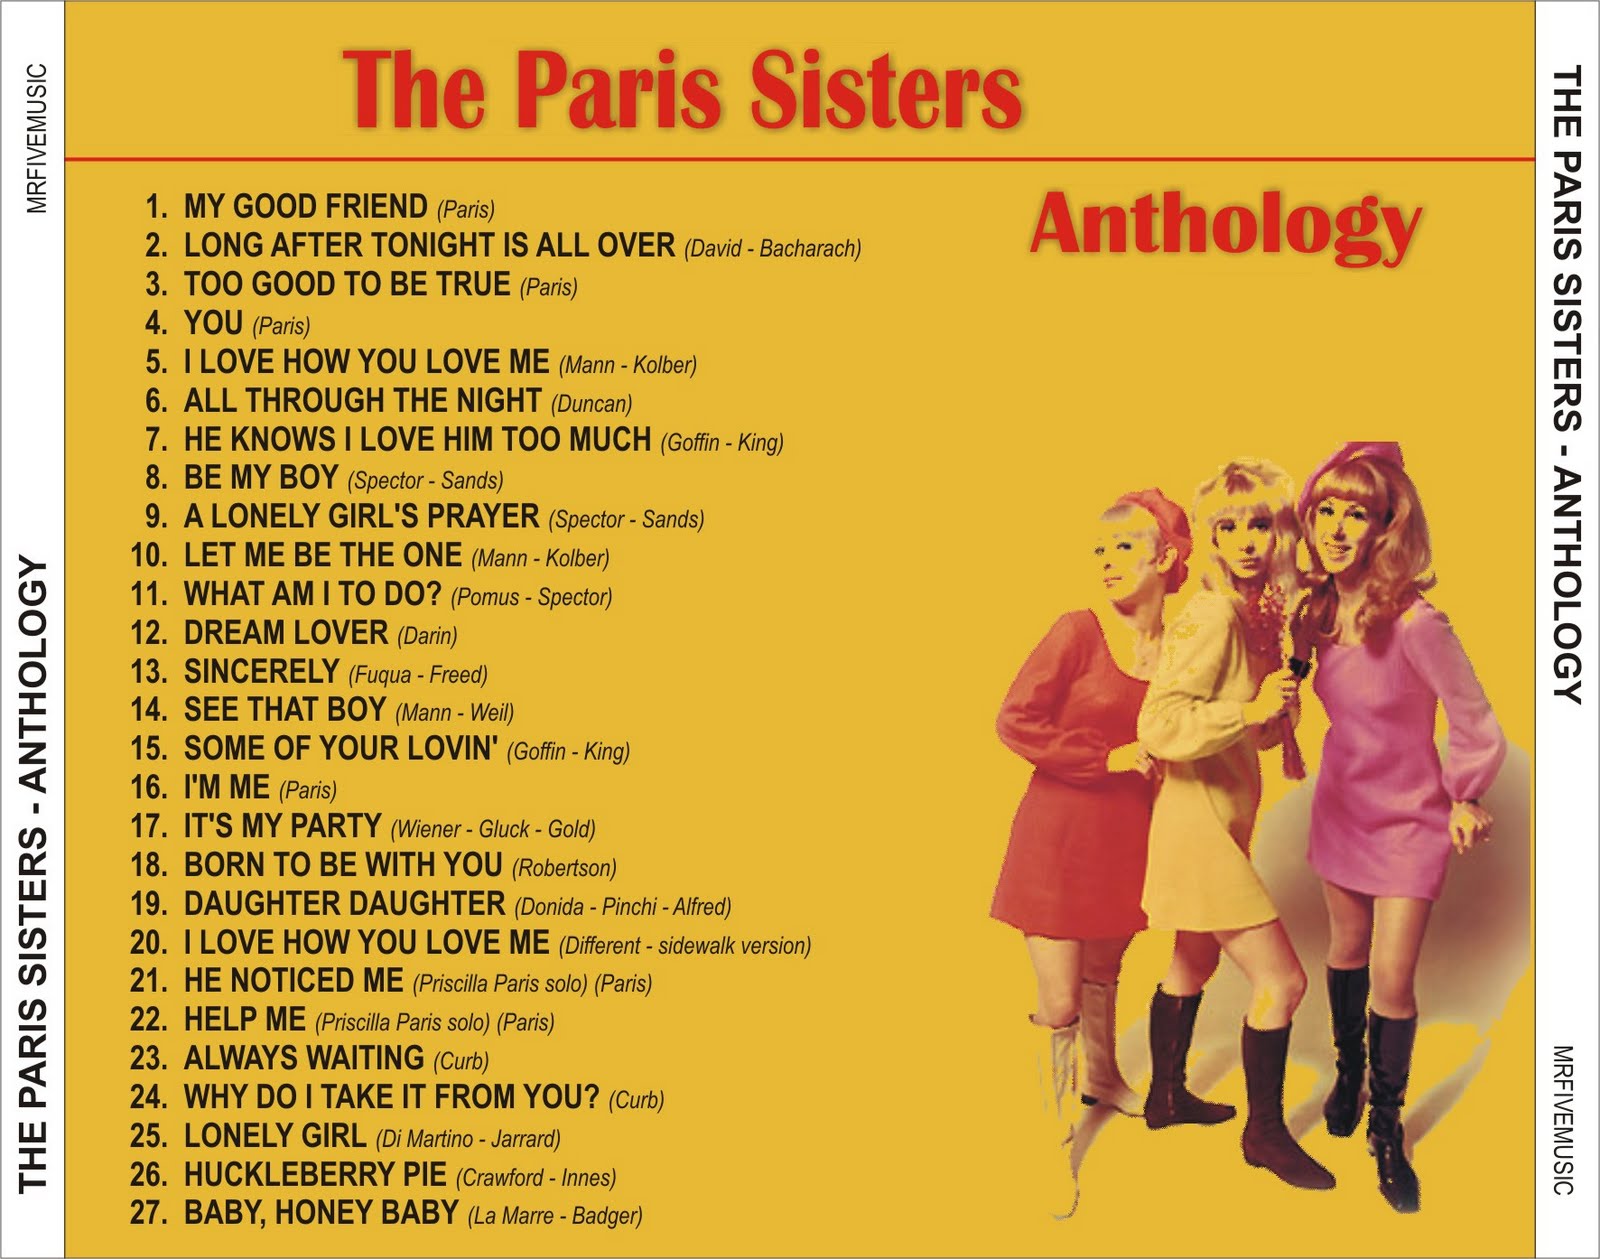 Paris sisters. The Paris sisters. Paris sisters i Love how you Love me. Alabama sister. The MCGUIRE sisters the MCGUIRE sisters Greatest Hits.